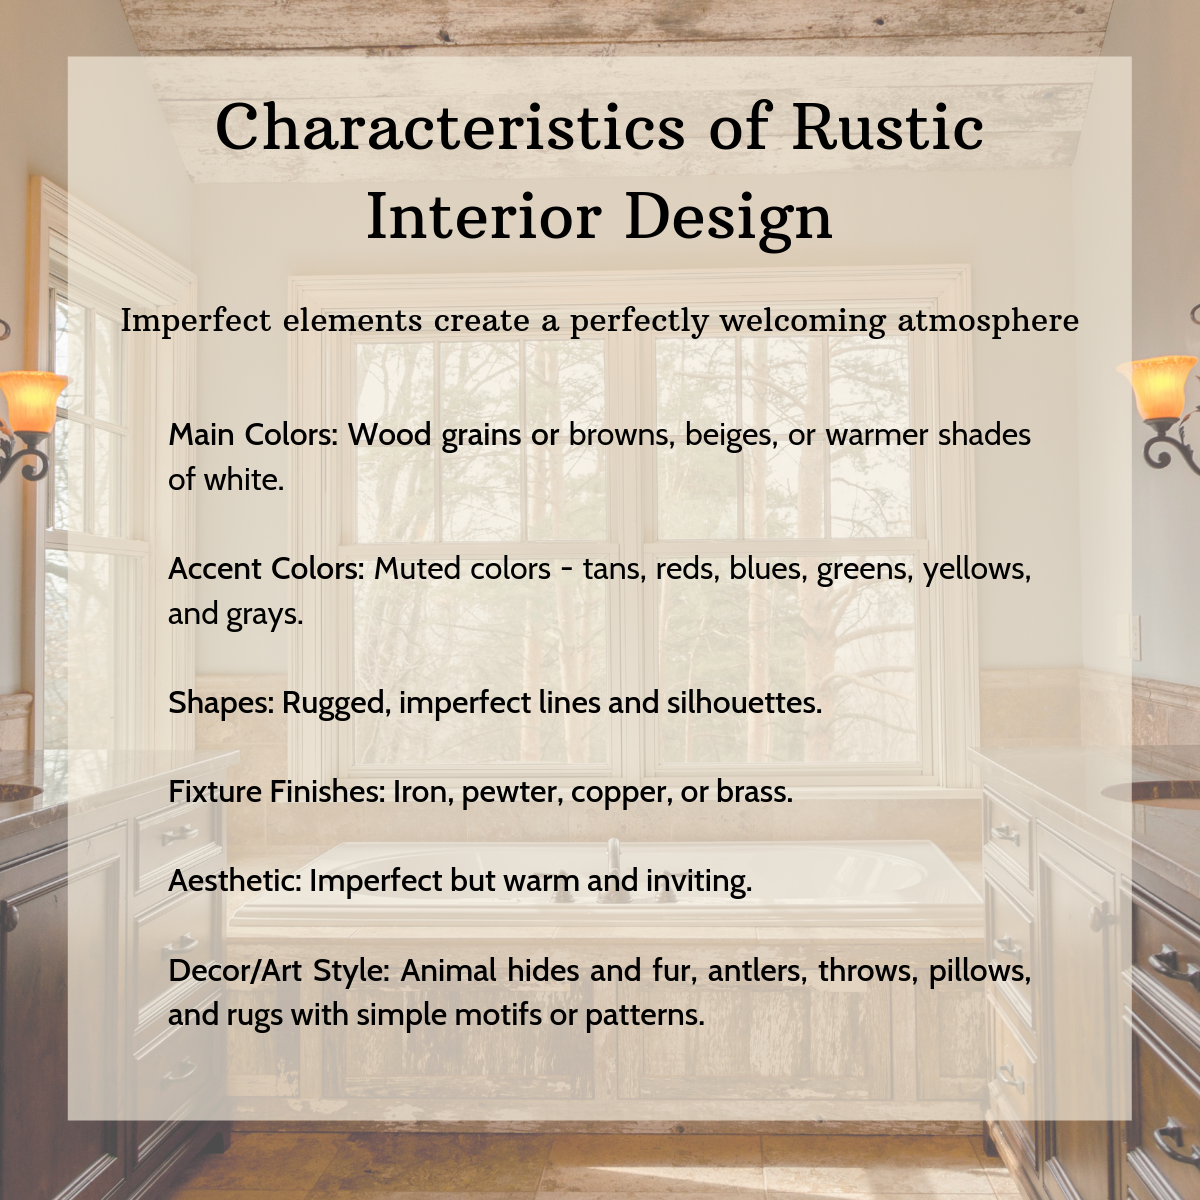 Rustic interior design characteristics